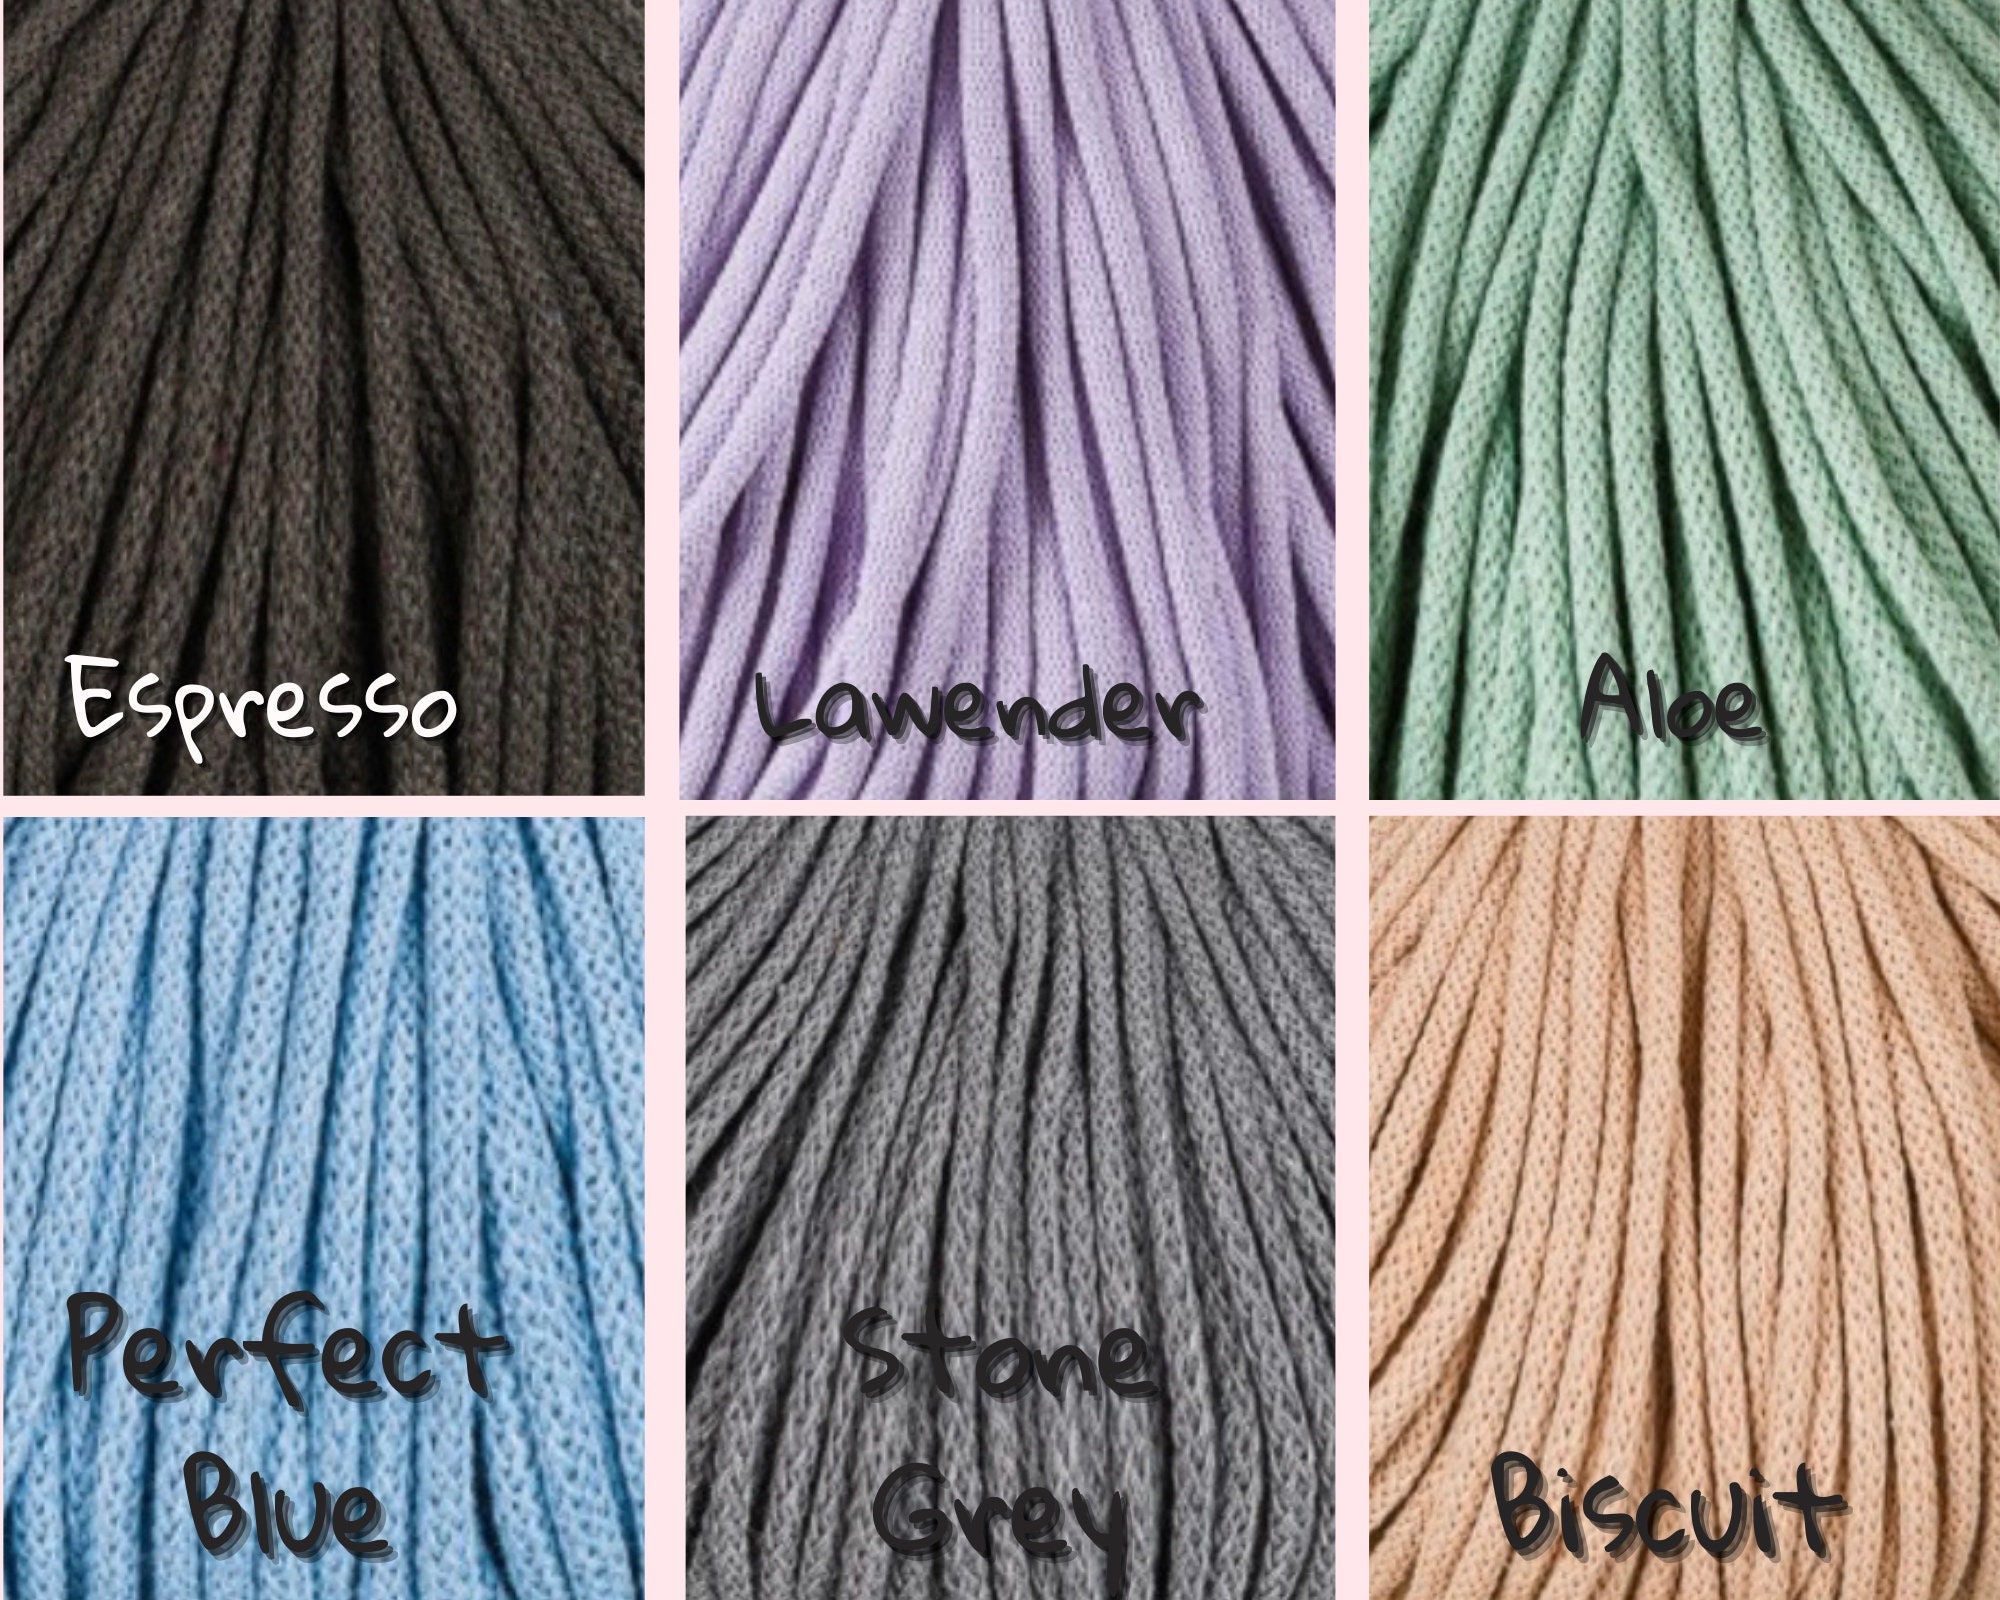 Braided cotton cord Premium - Bobbiny - Blush, 5 mm, 100 m